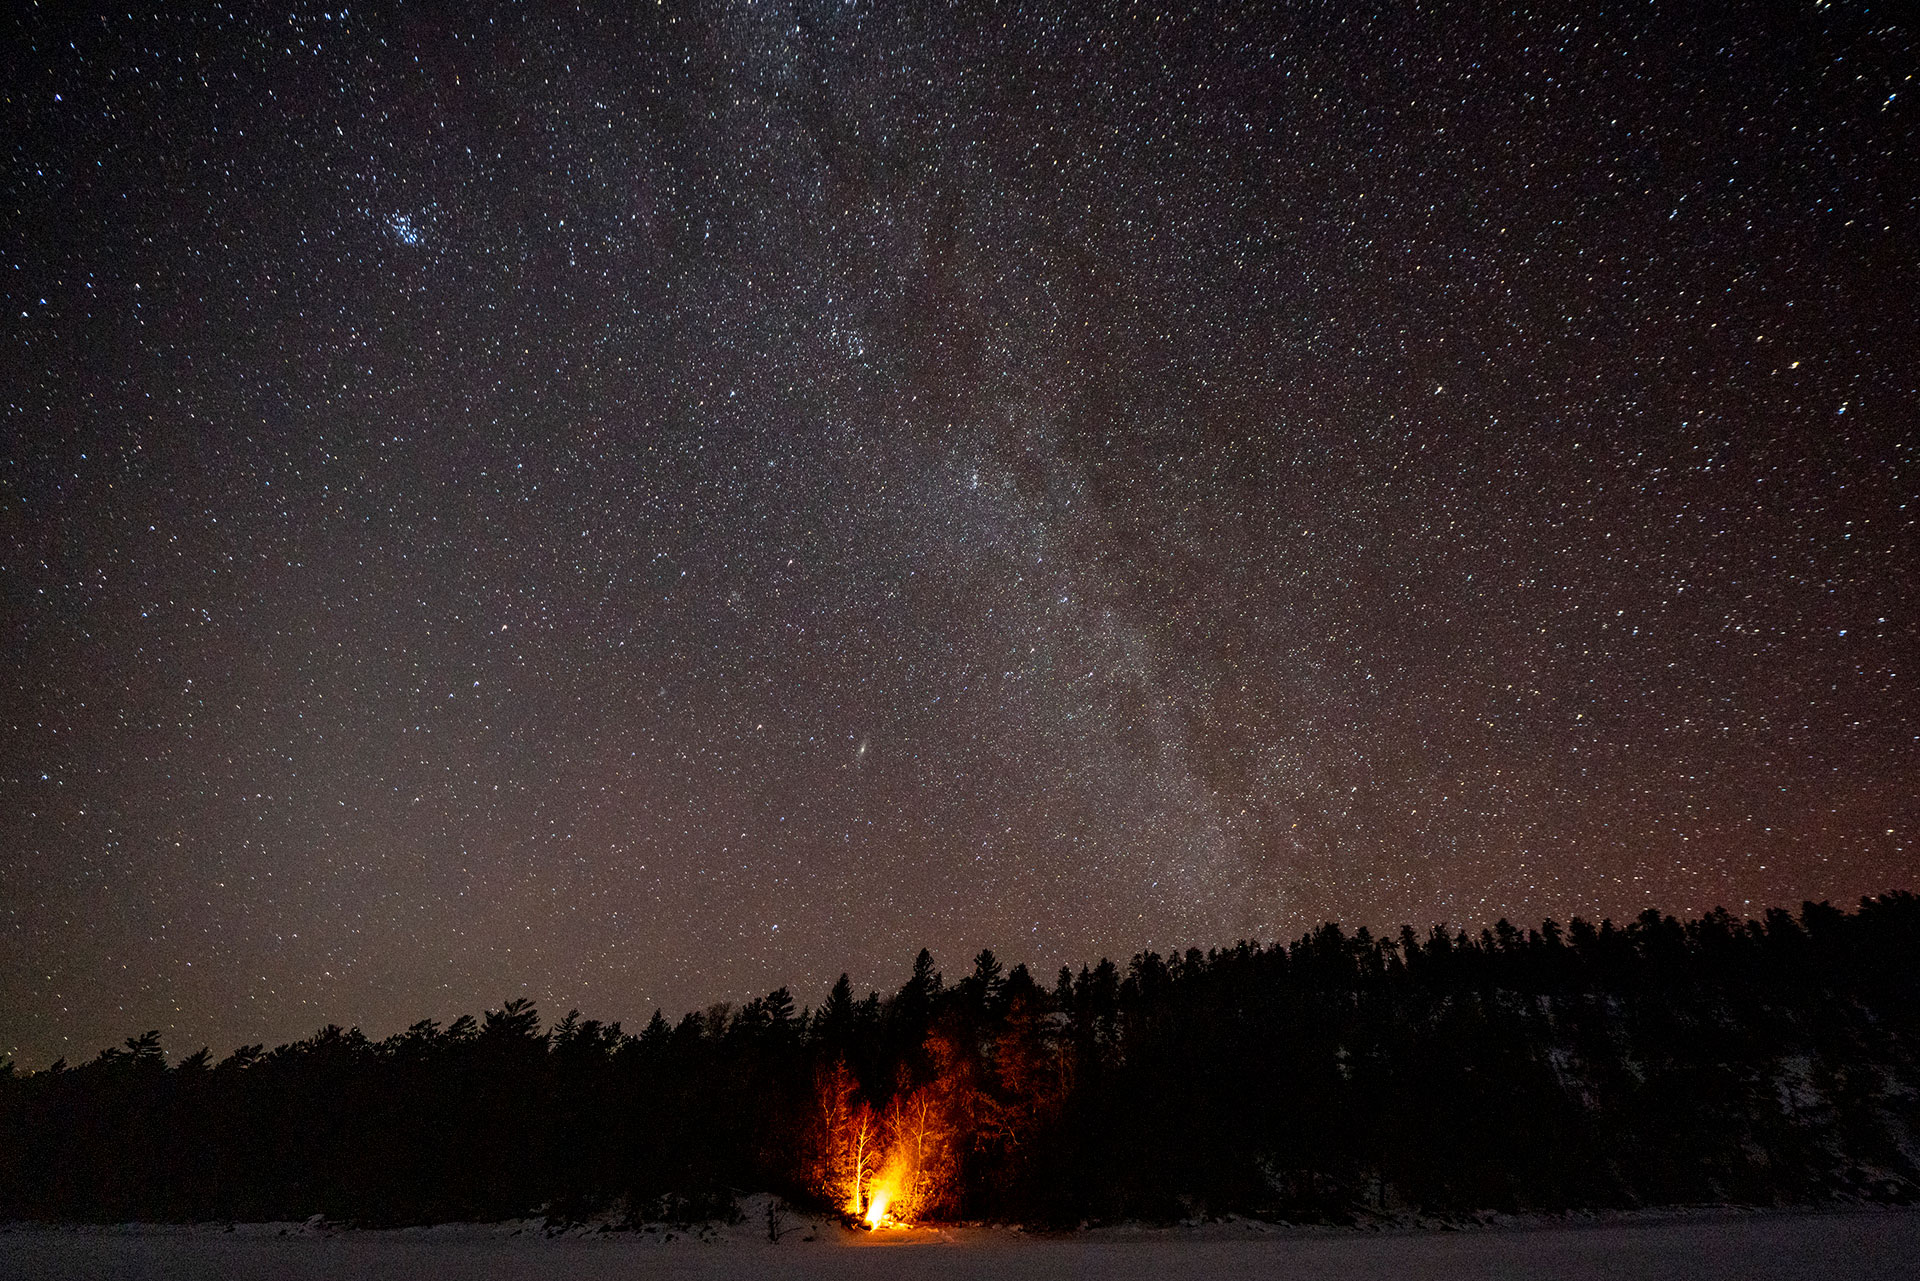 a dark sky with Milky Way over a campfire